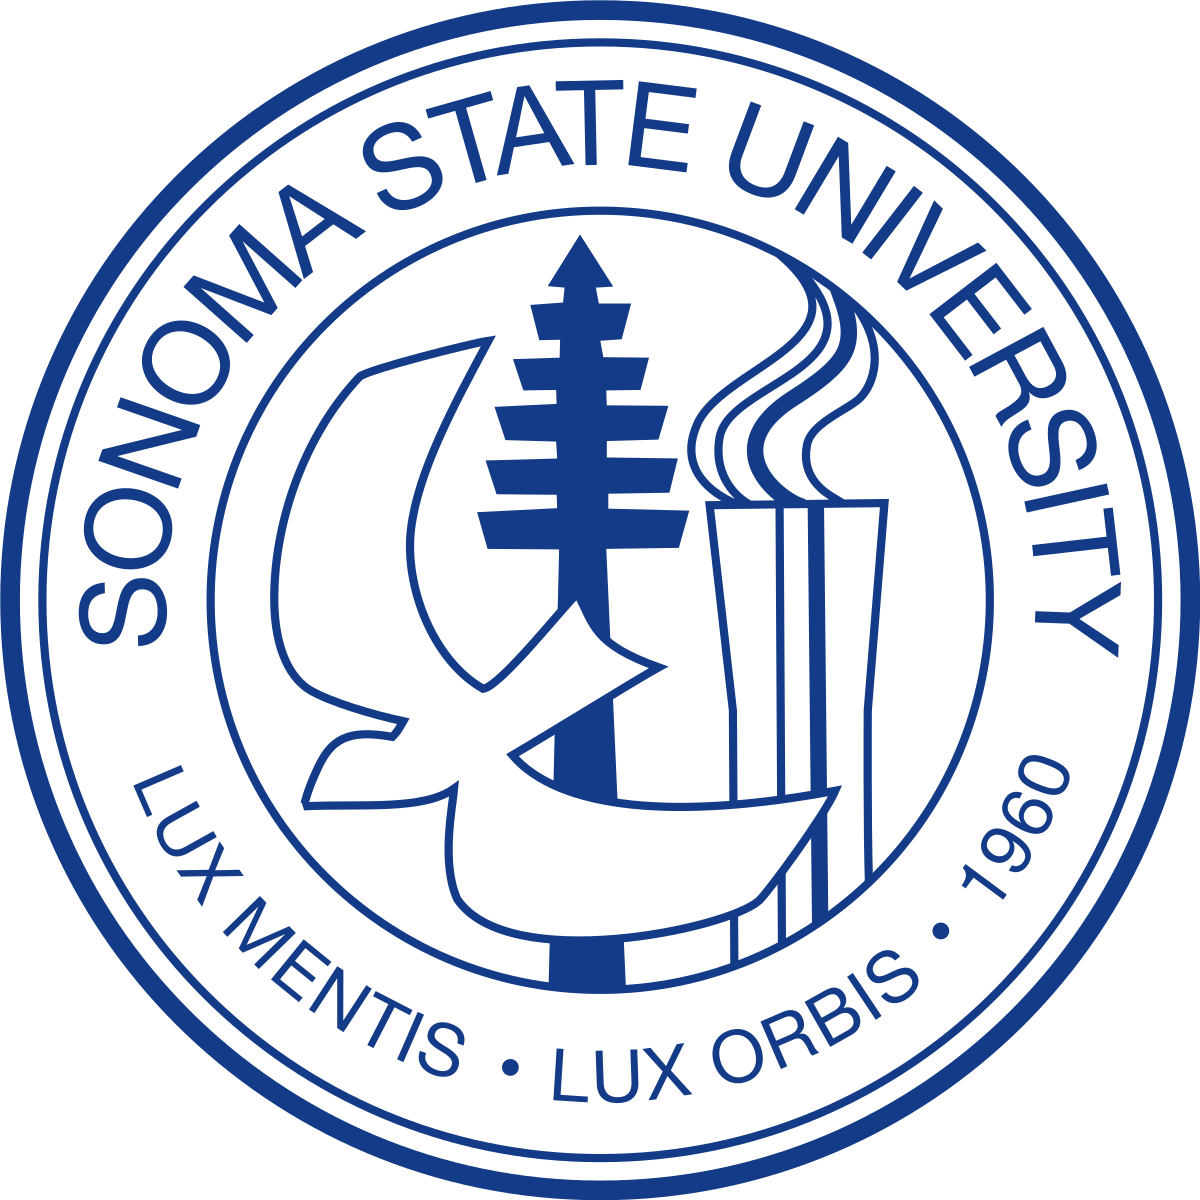 Sonoma State University's seal